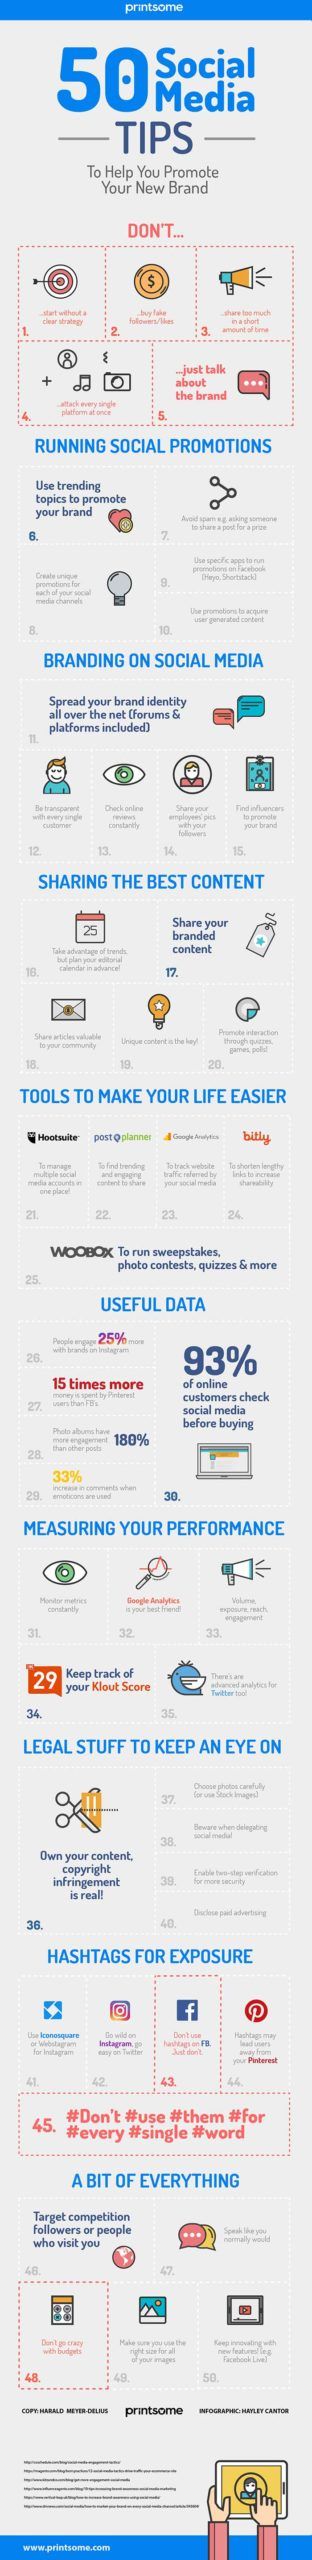 infographic-50-social-media-tips-daglega-blog